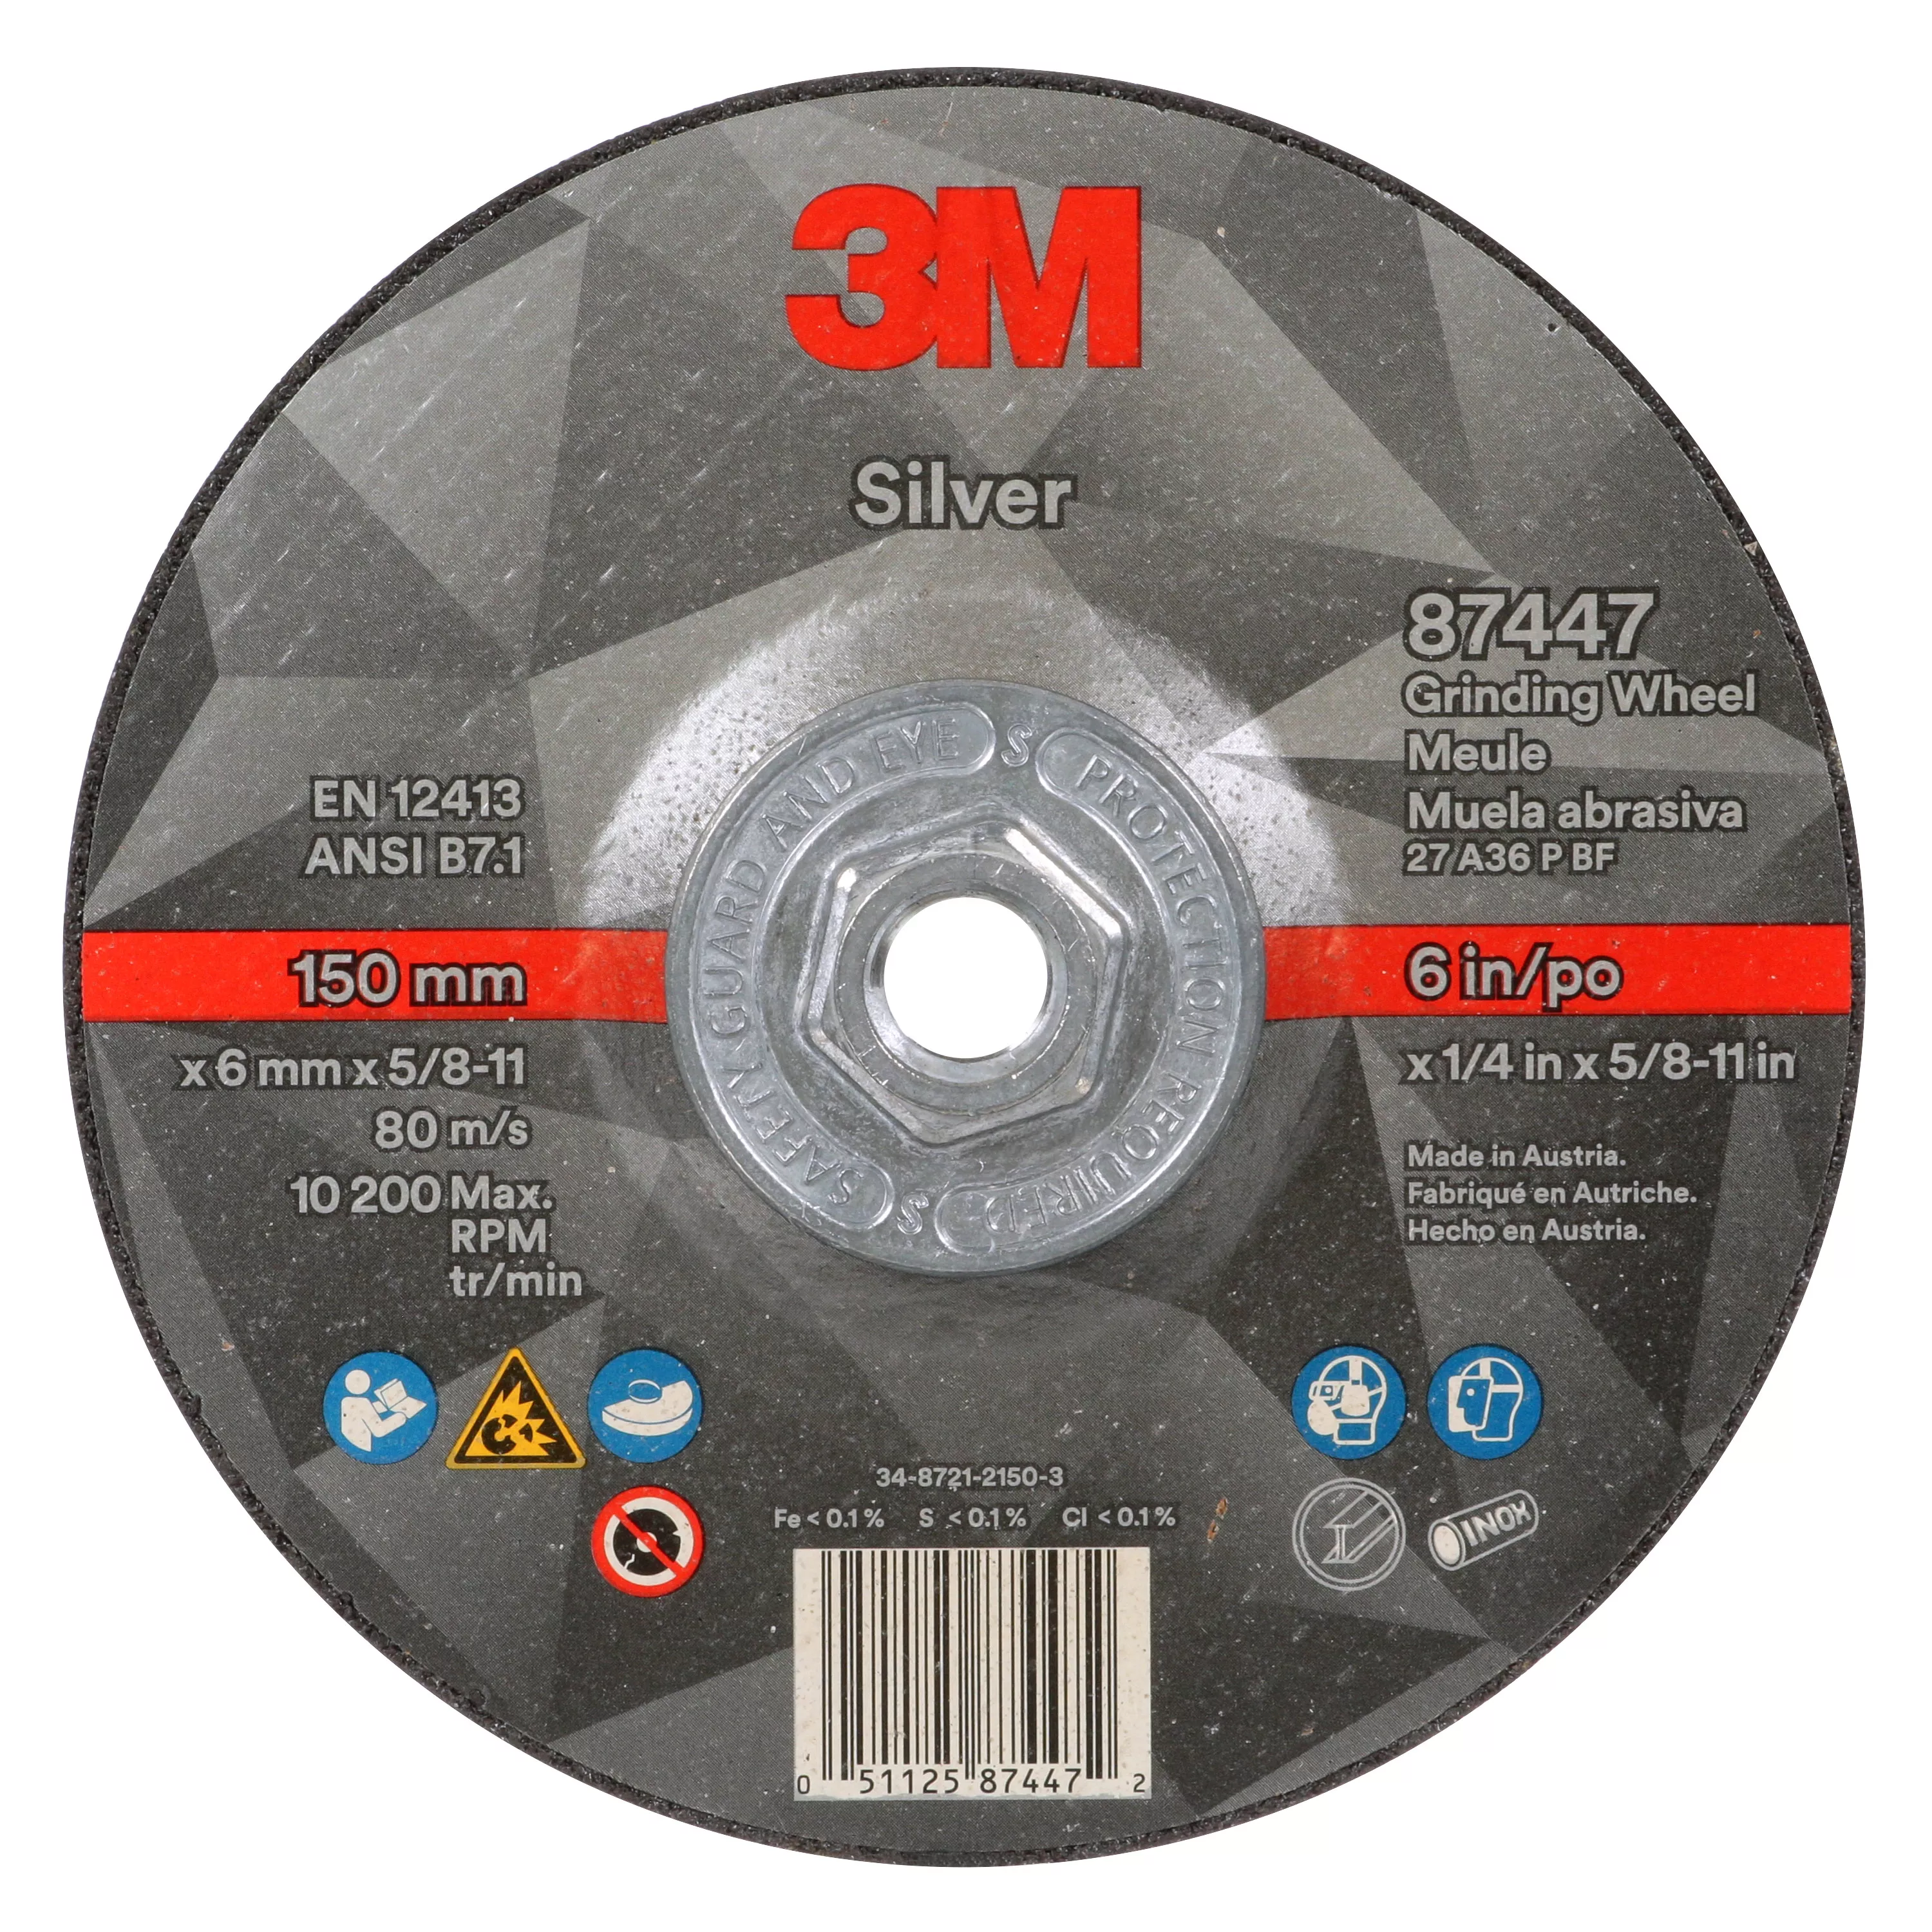 3M™ Silver Depressed Center Grinding Wheel, 87447, Quick Change, Type
27, 6 x 1/4 x 5/8